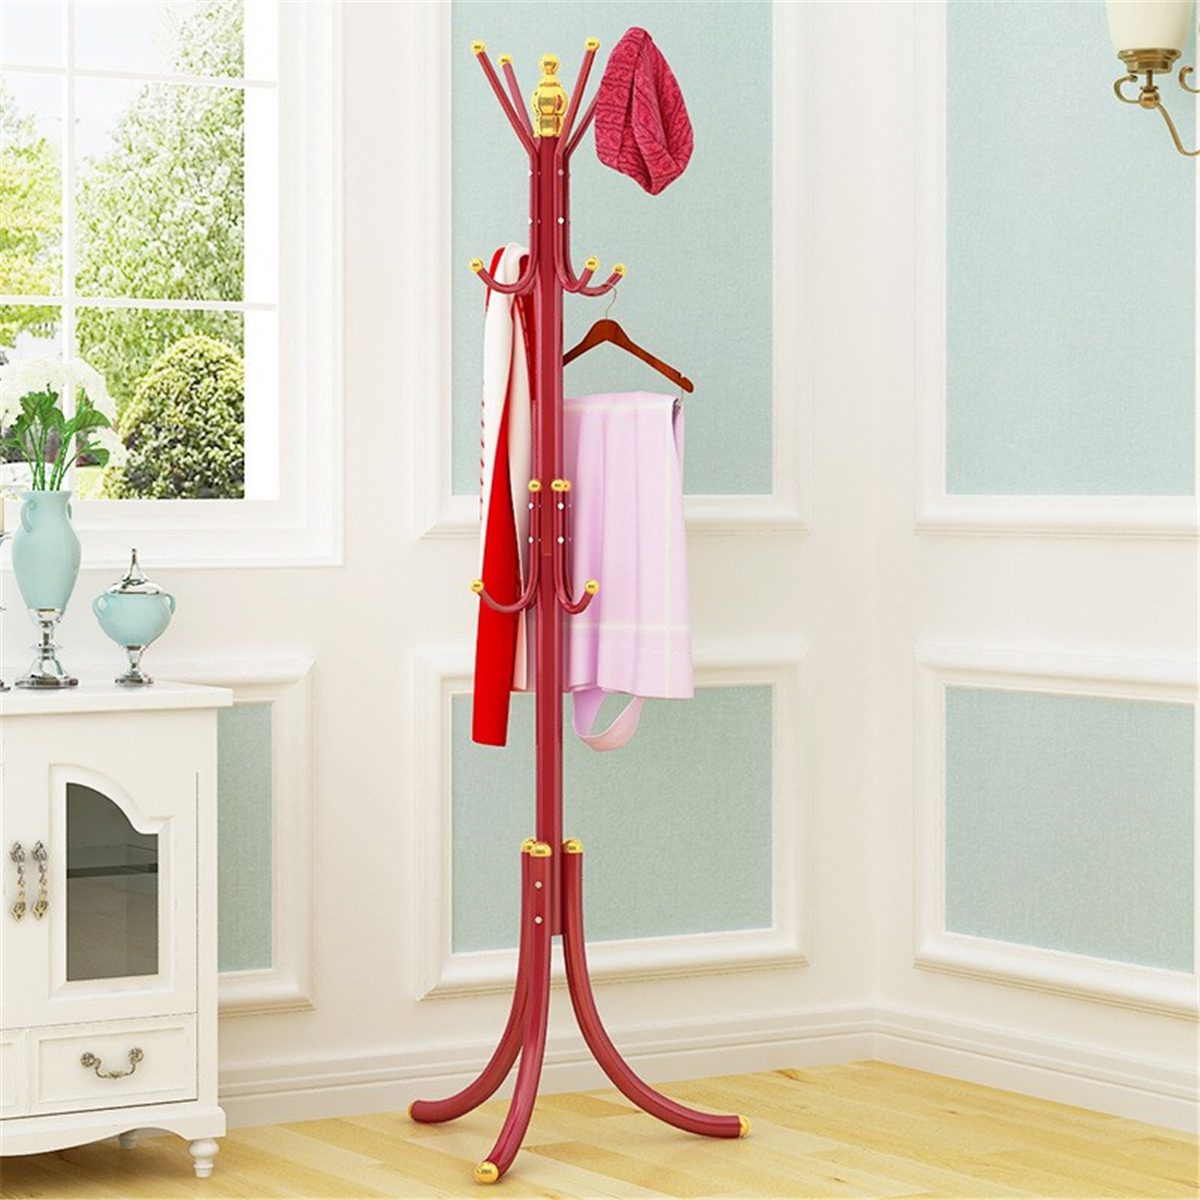 Coat-Rack-Hat-Stand-Clothes-Hanger-Umbrella-Holder-Metal-Home-Office-Entry-1679513-4